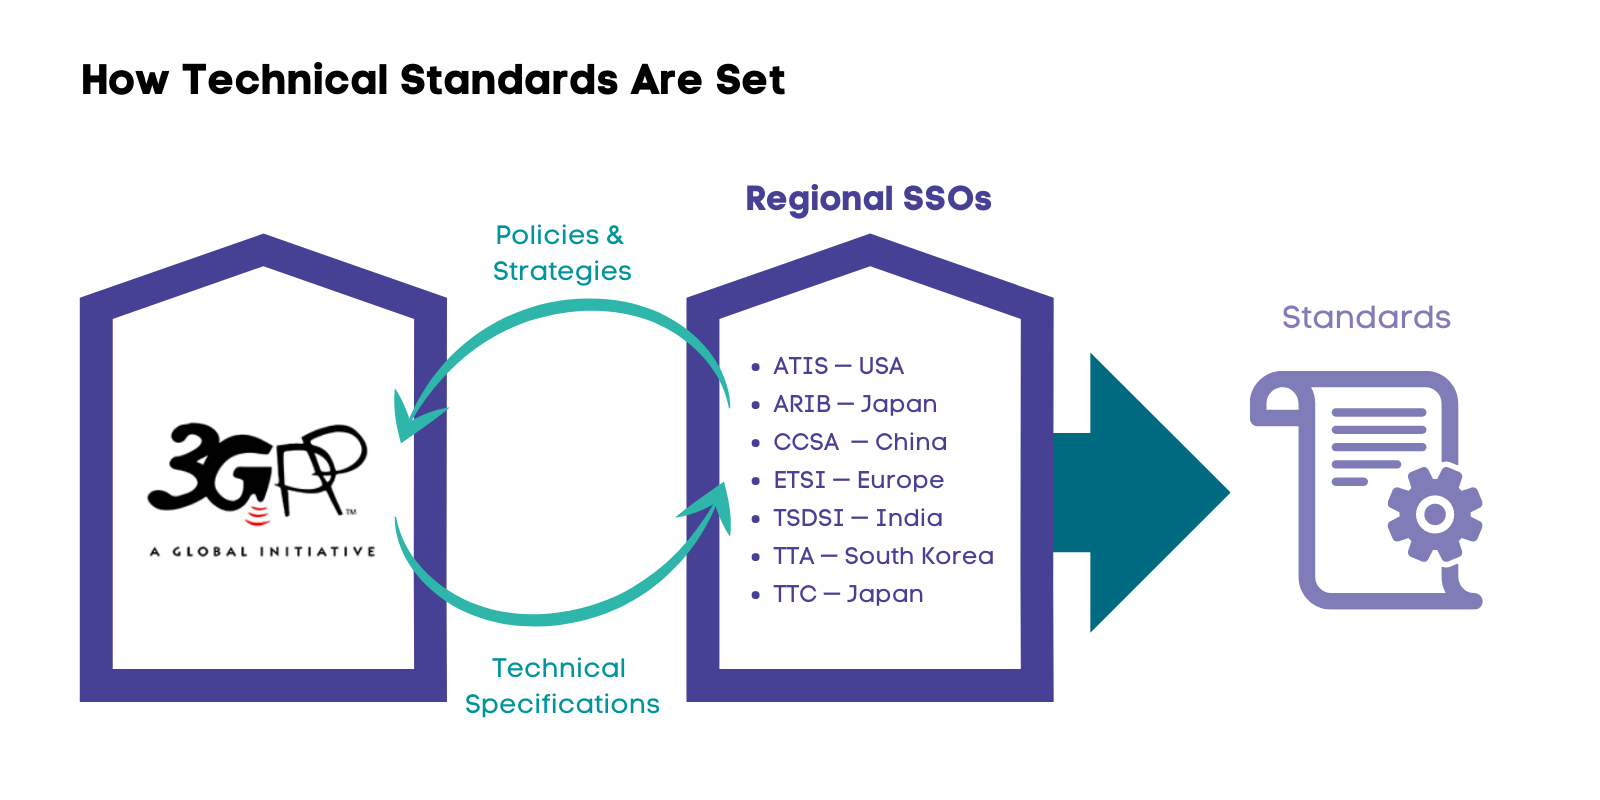 How 3GPP and SSOs set technical standards